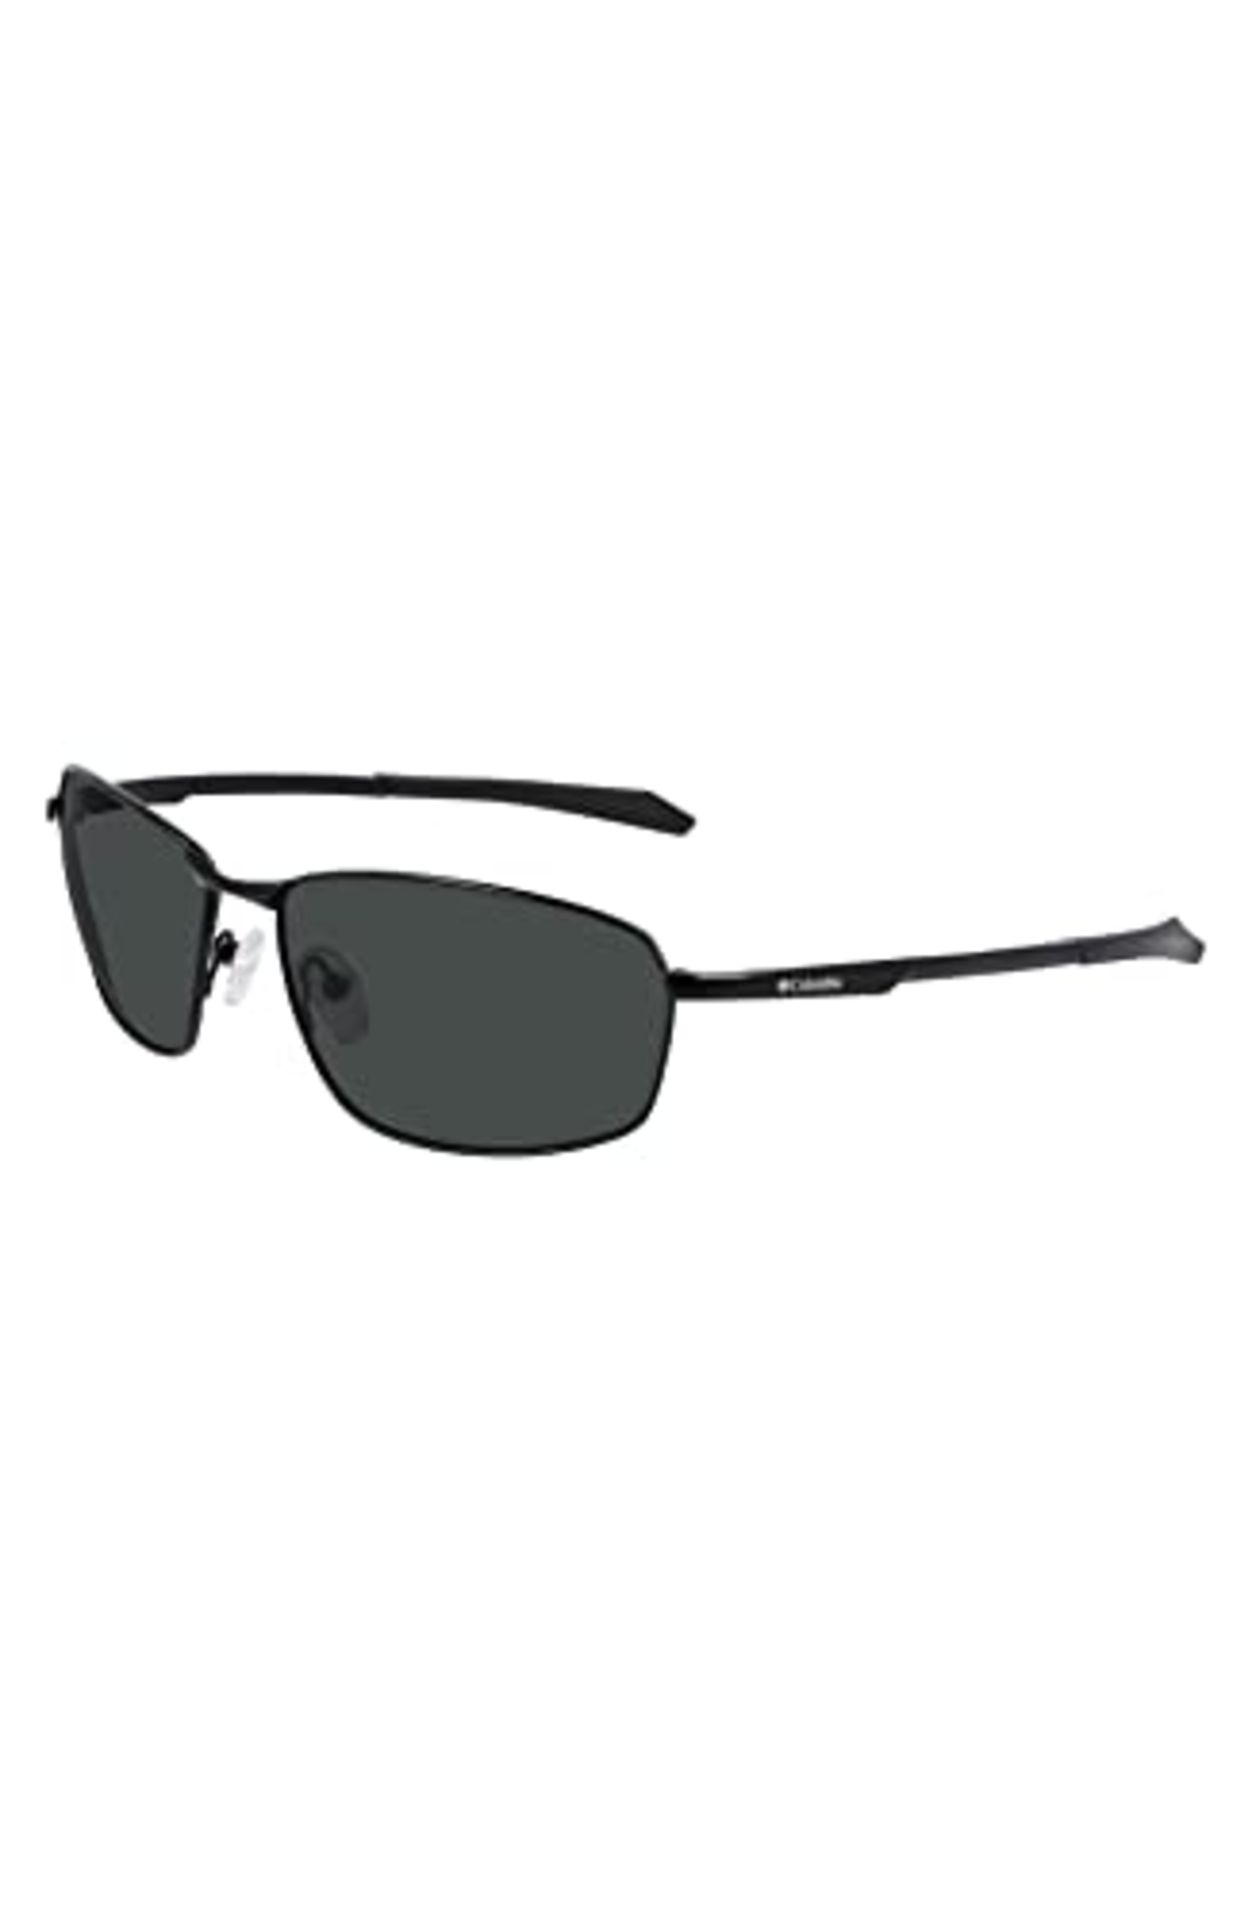 RRP £53.00 Columbia Men's Sunglasses C114SP FIR RIDGE - Shiny Black/Solid Green Lens with Solid G